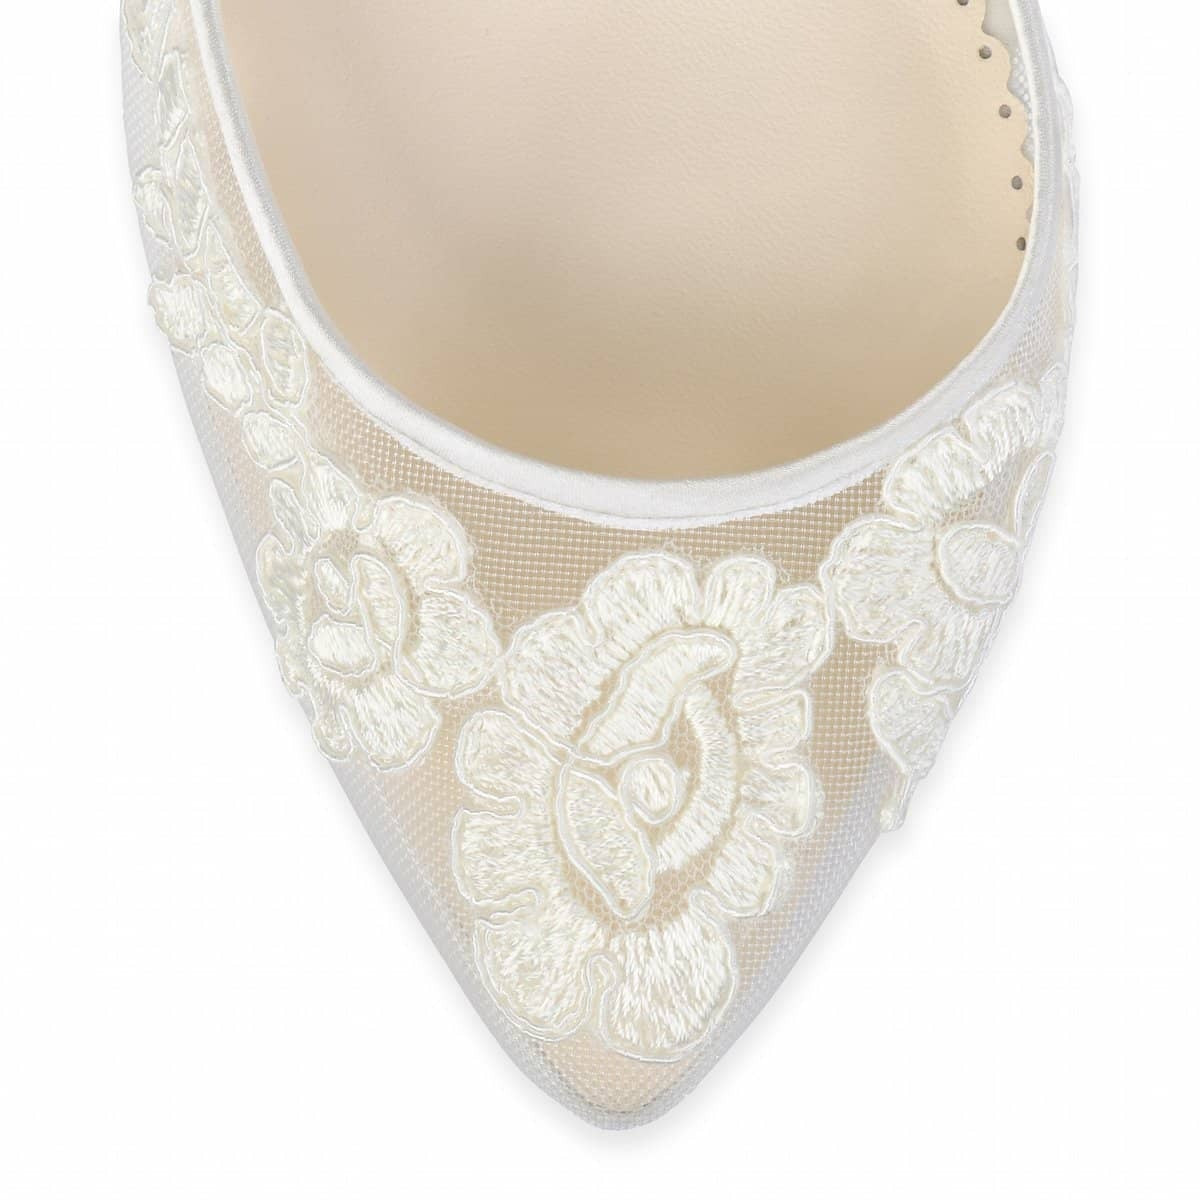 Abigail Lace Wedding Heels in Ivory by Bella Belle Shoes – Nataya